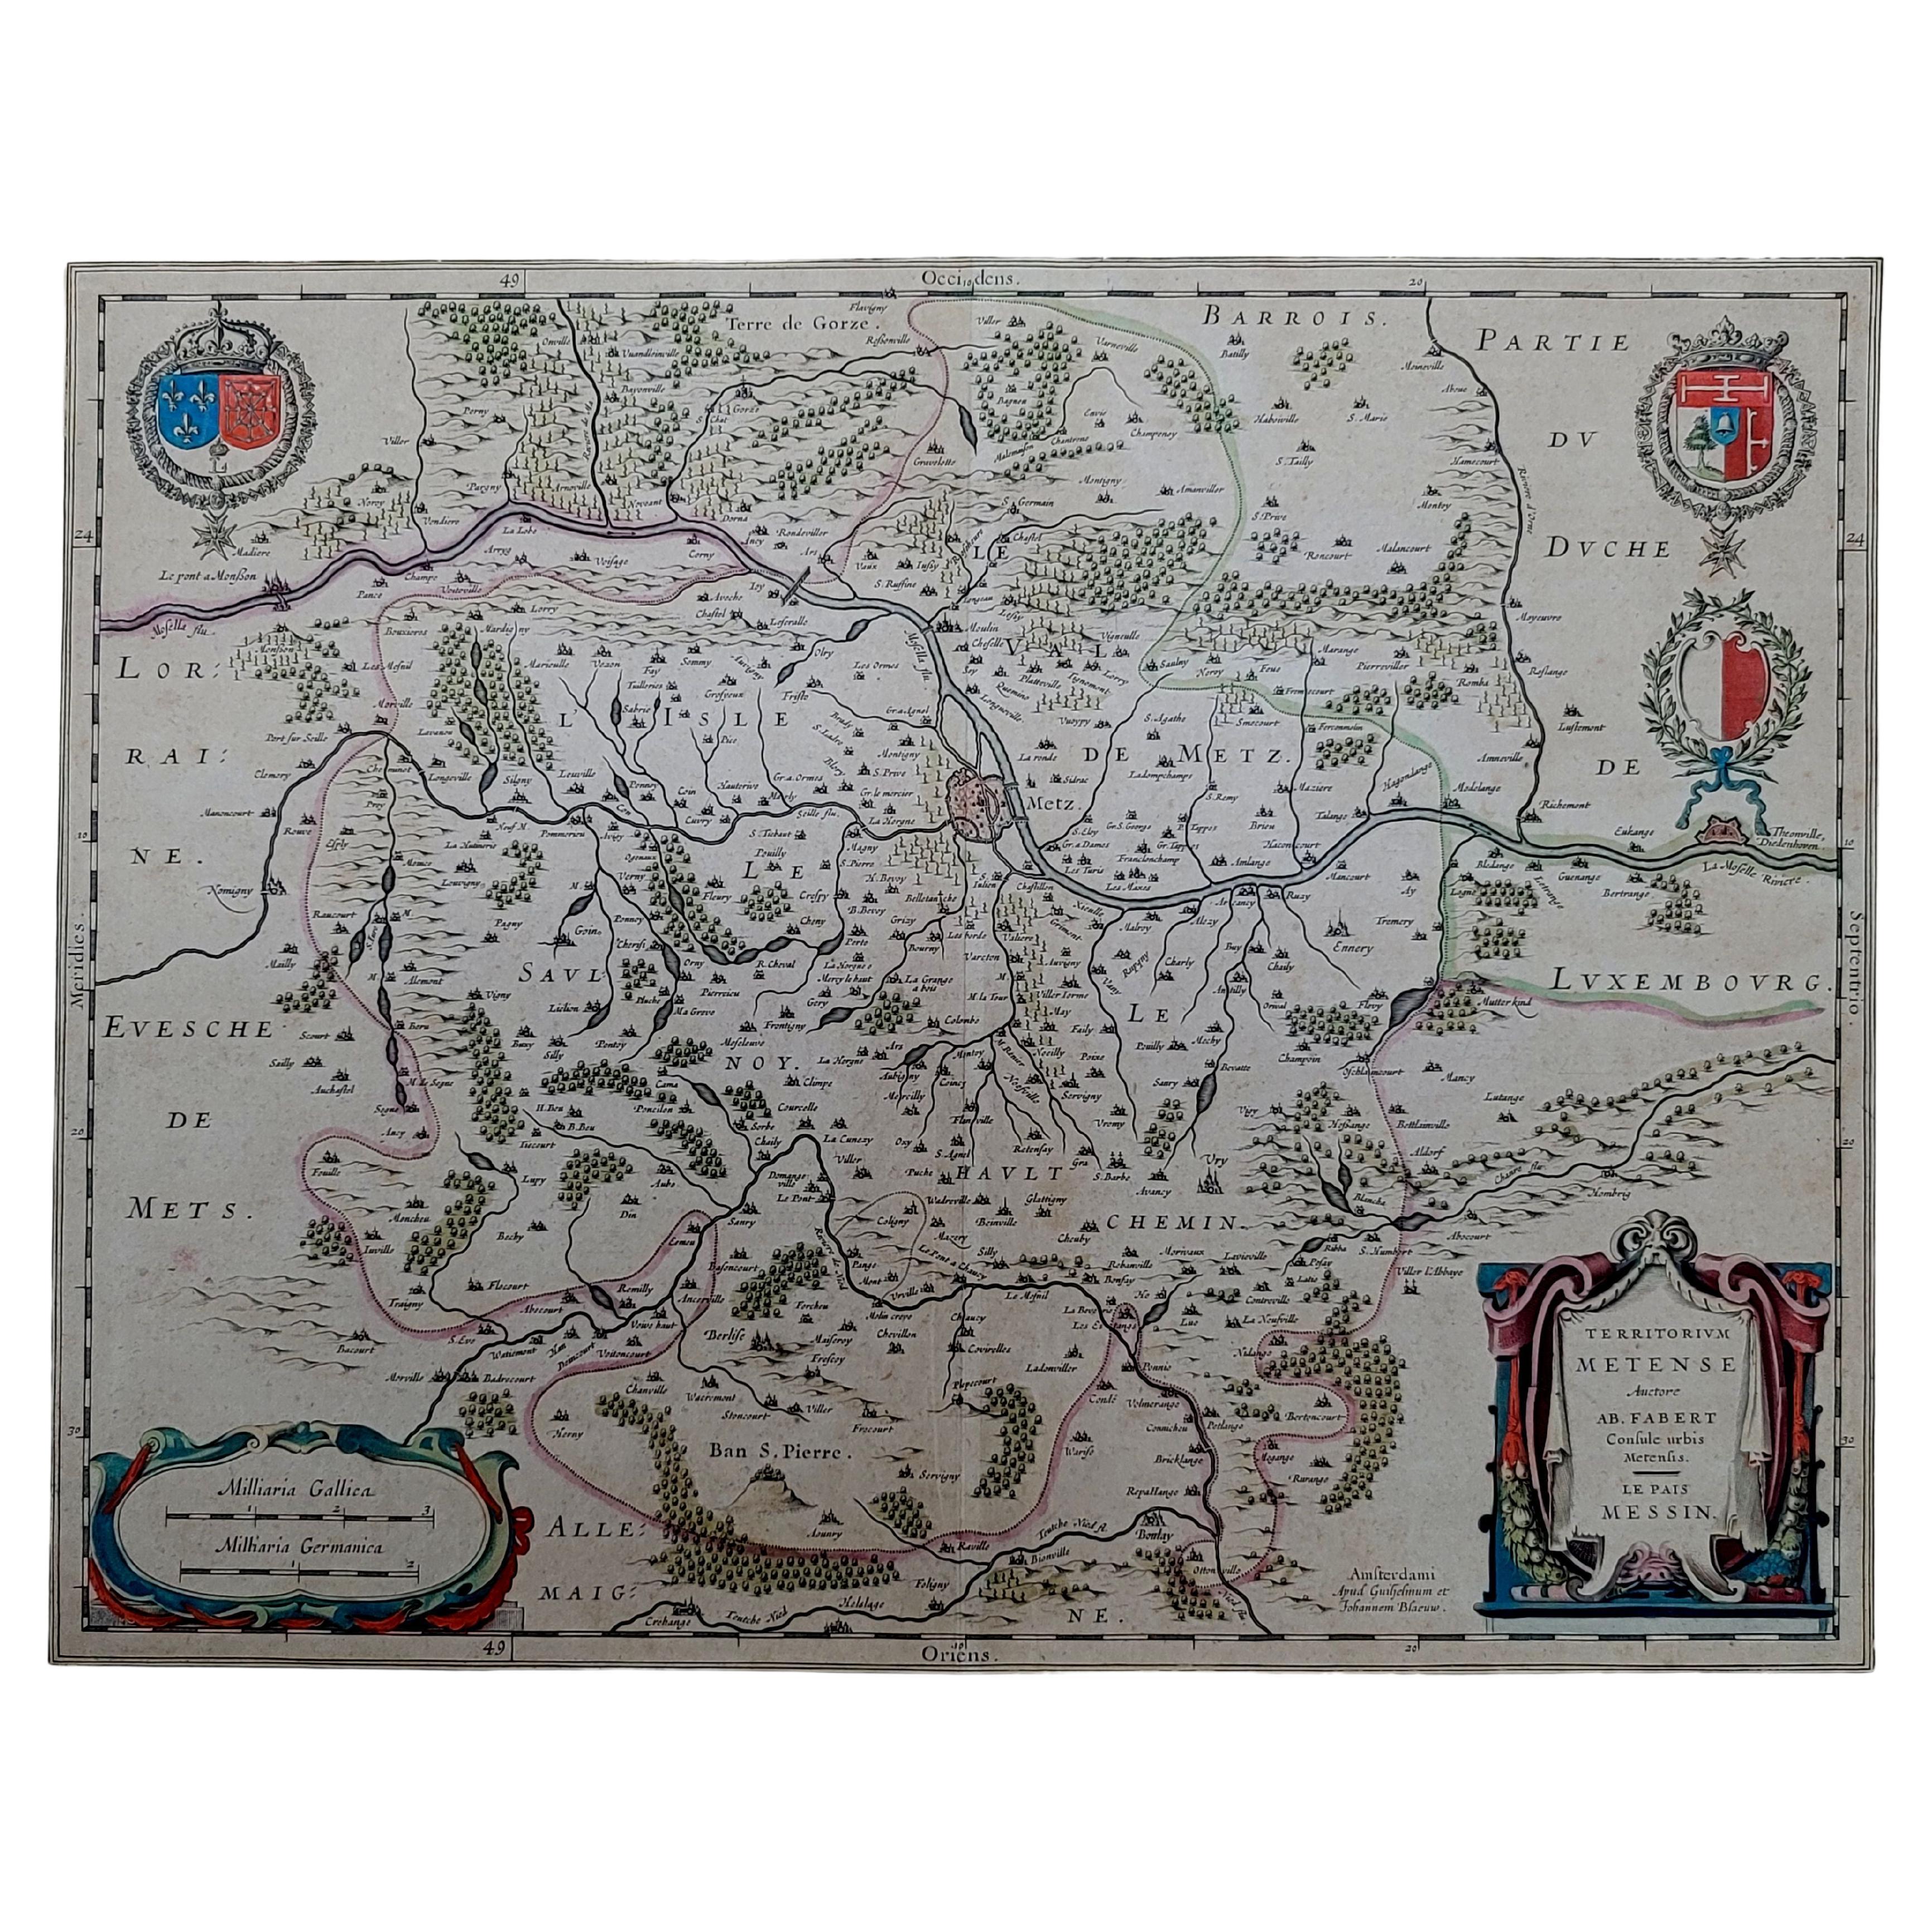 1656 Jansson Map Metz Region of France Entitled "Territorium Metense" Ric0014